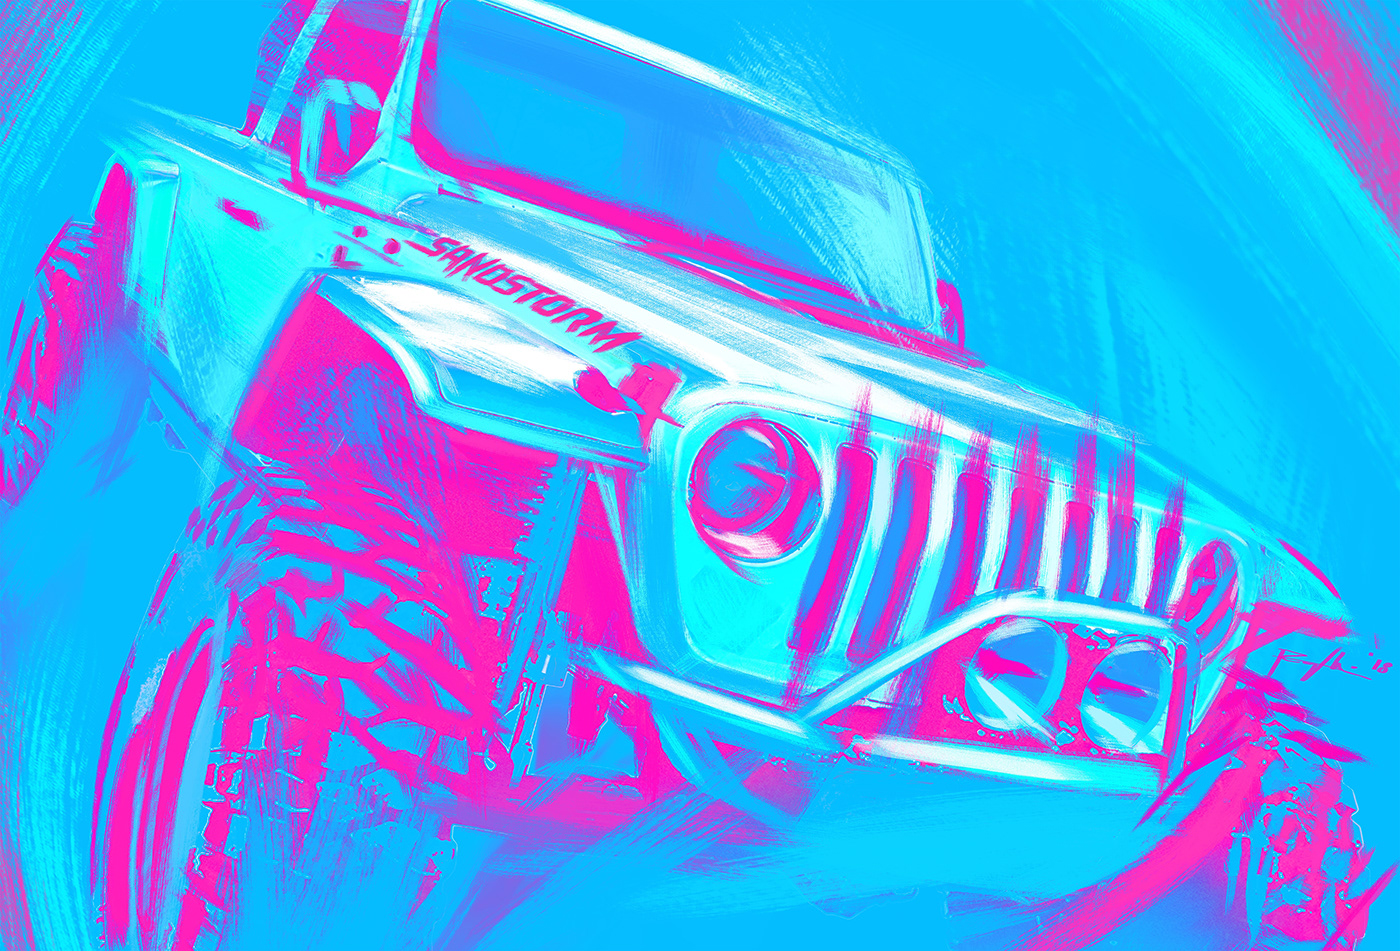 car design Skething Automotive design jeep rendering simkom idsketching car sketch photoshop industrial design 